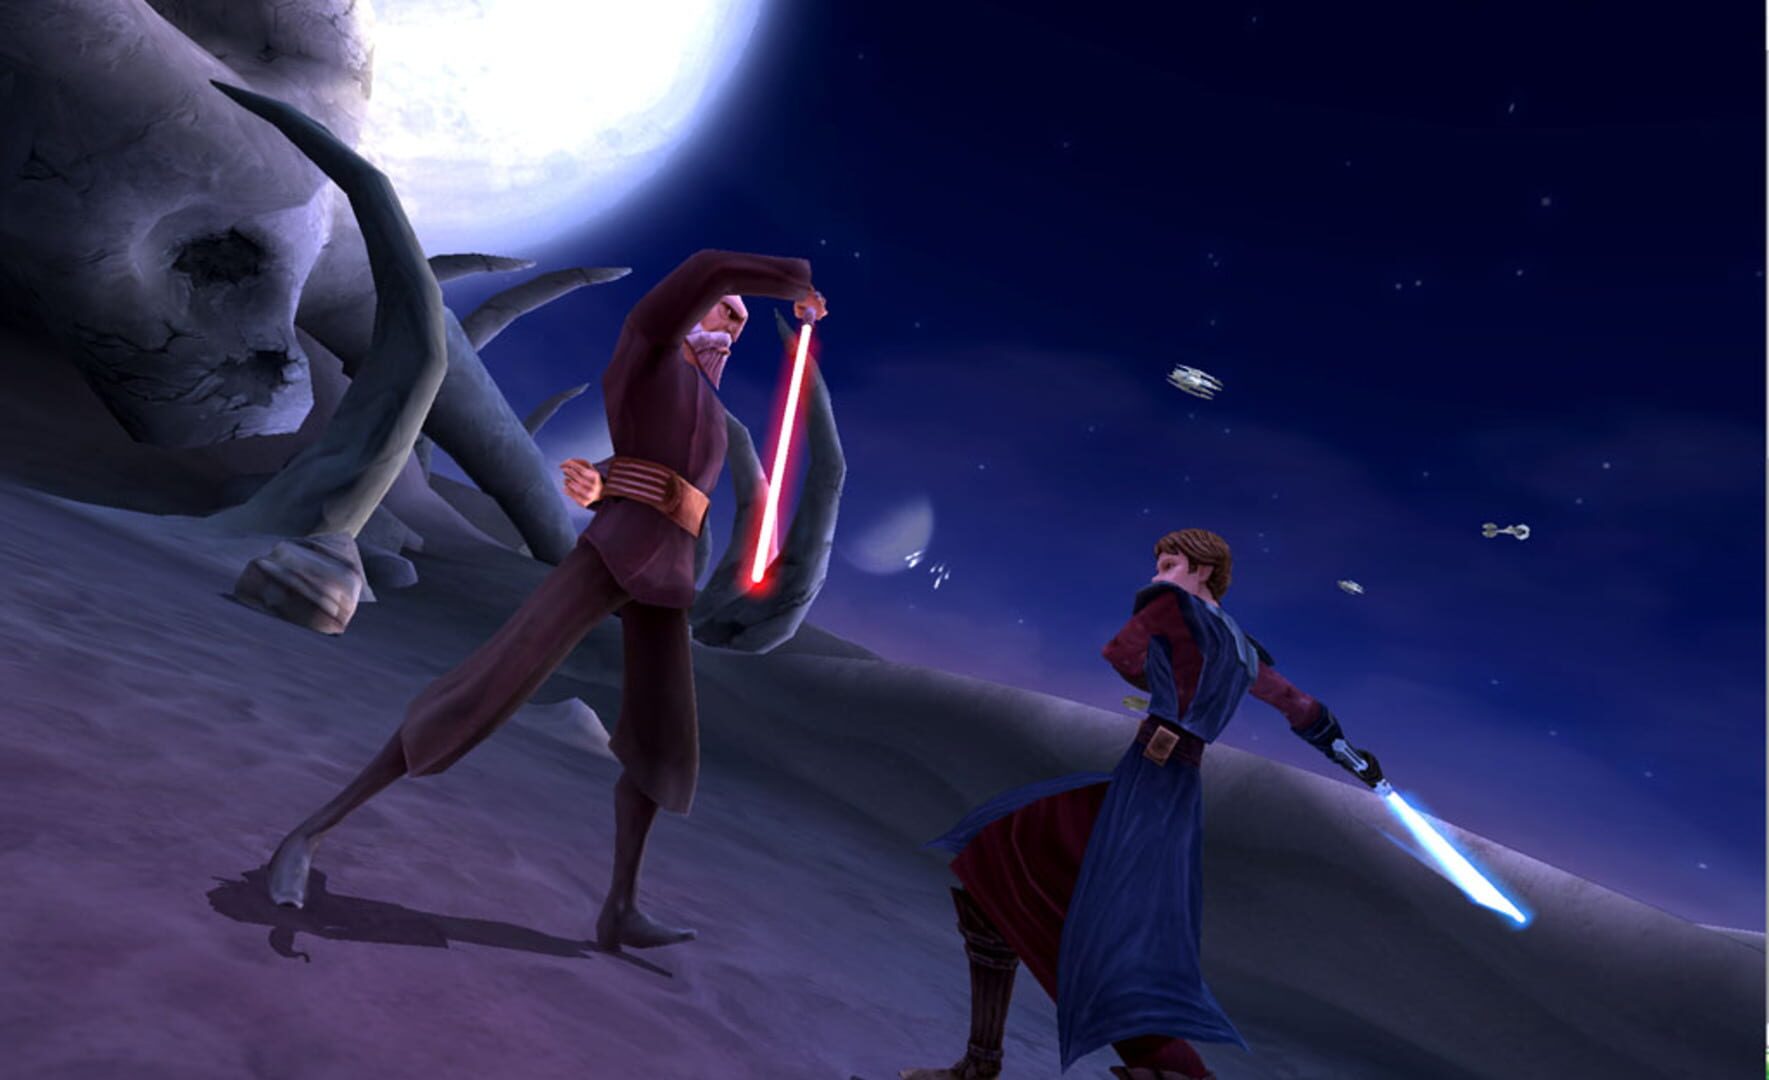 Star Wars: The Clone Wars – Lightsaber Duels